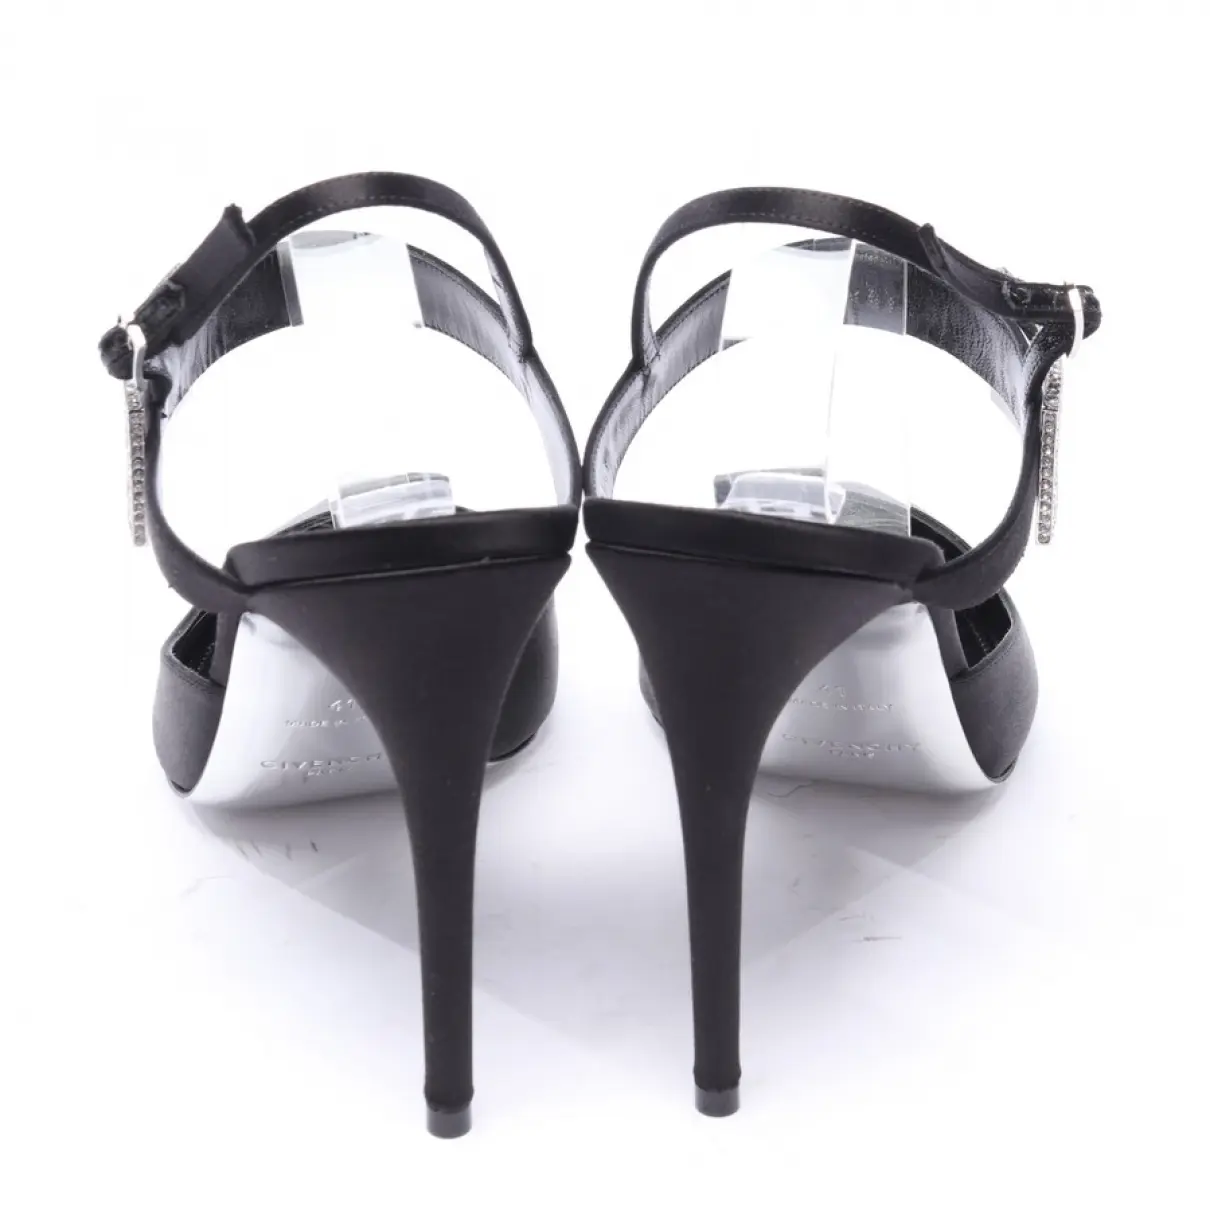 Cloth heels Givenchy